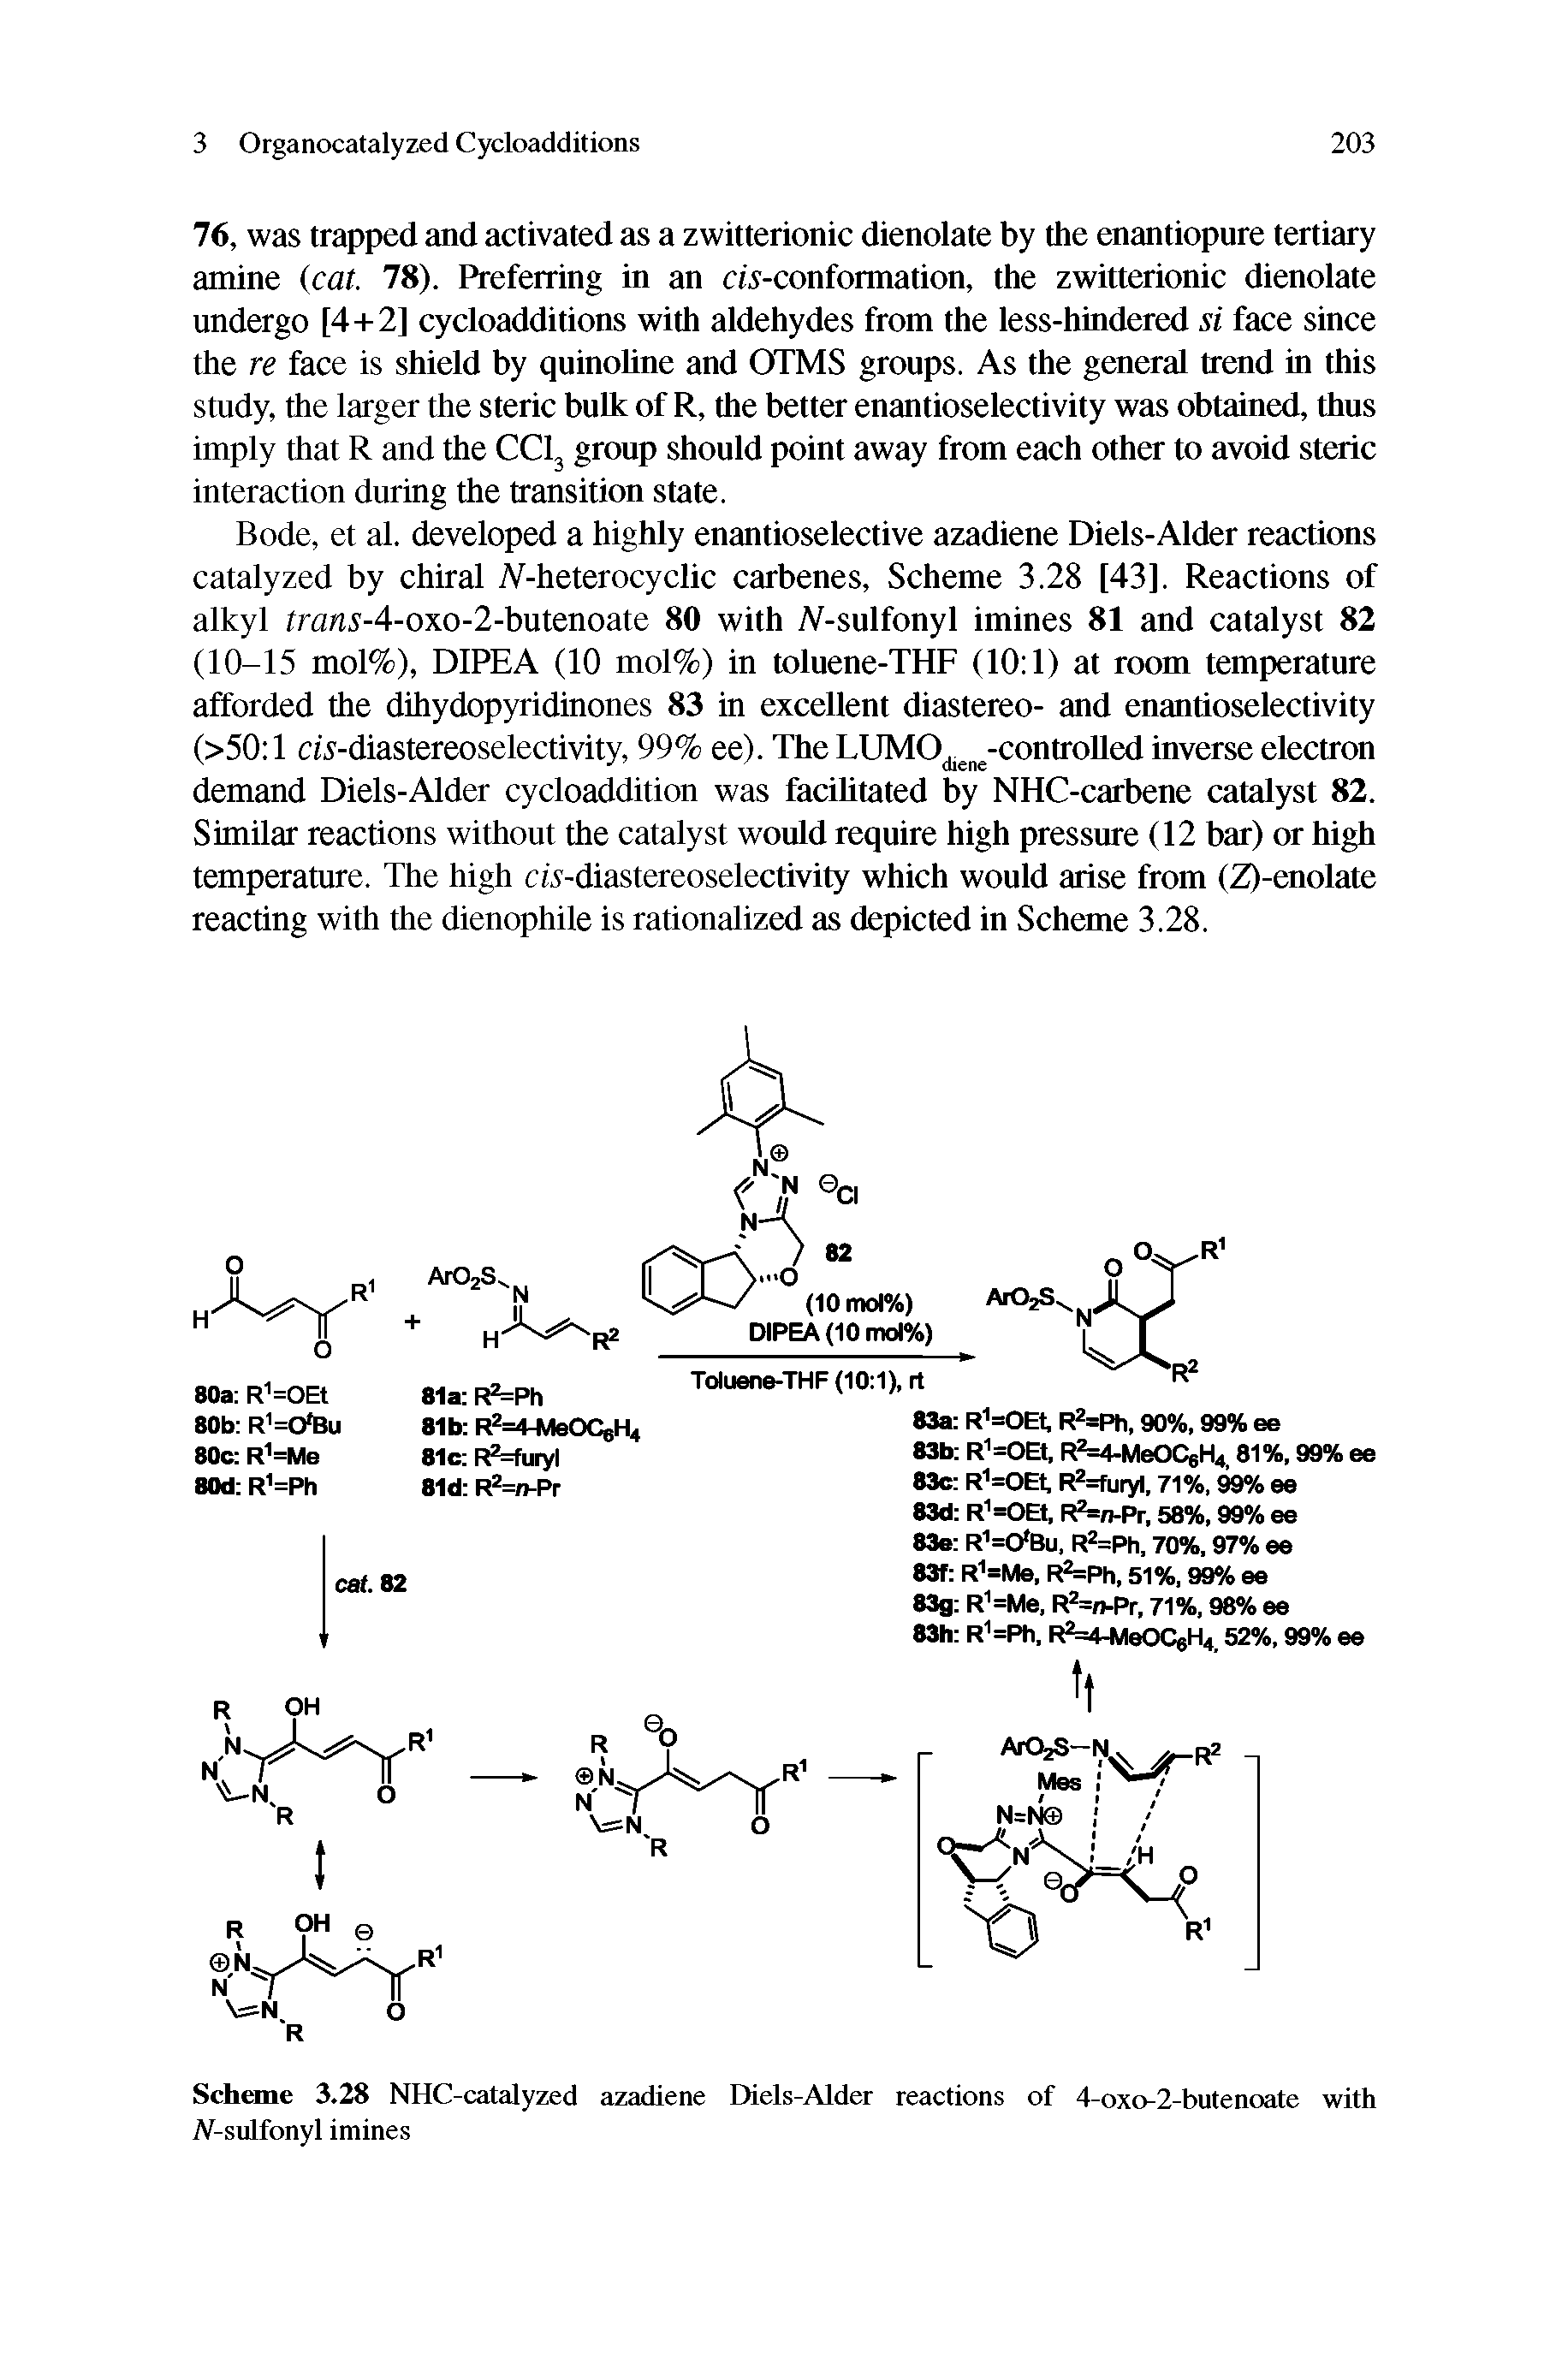 Scheme 3.28 NHC-catalyzed azadiene Diels-Alder reactions of 4-oxo-2-butenoate with tV-sulfonyl imines...